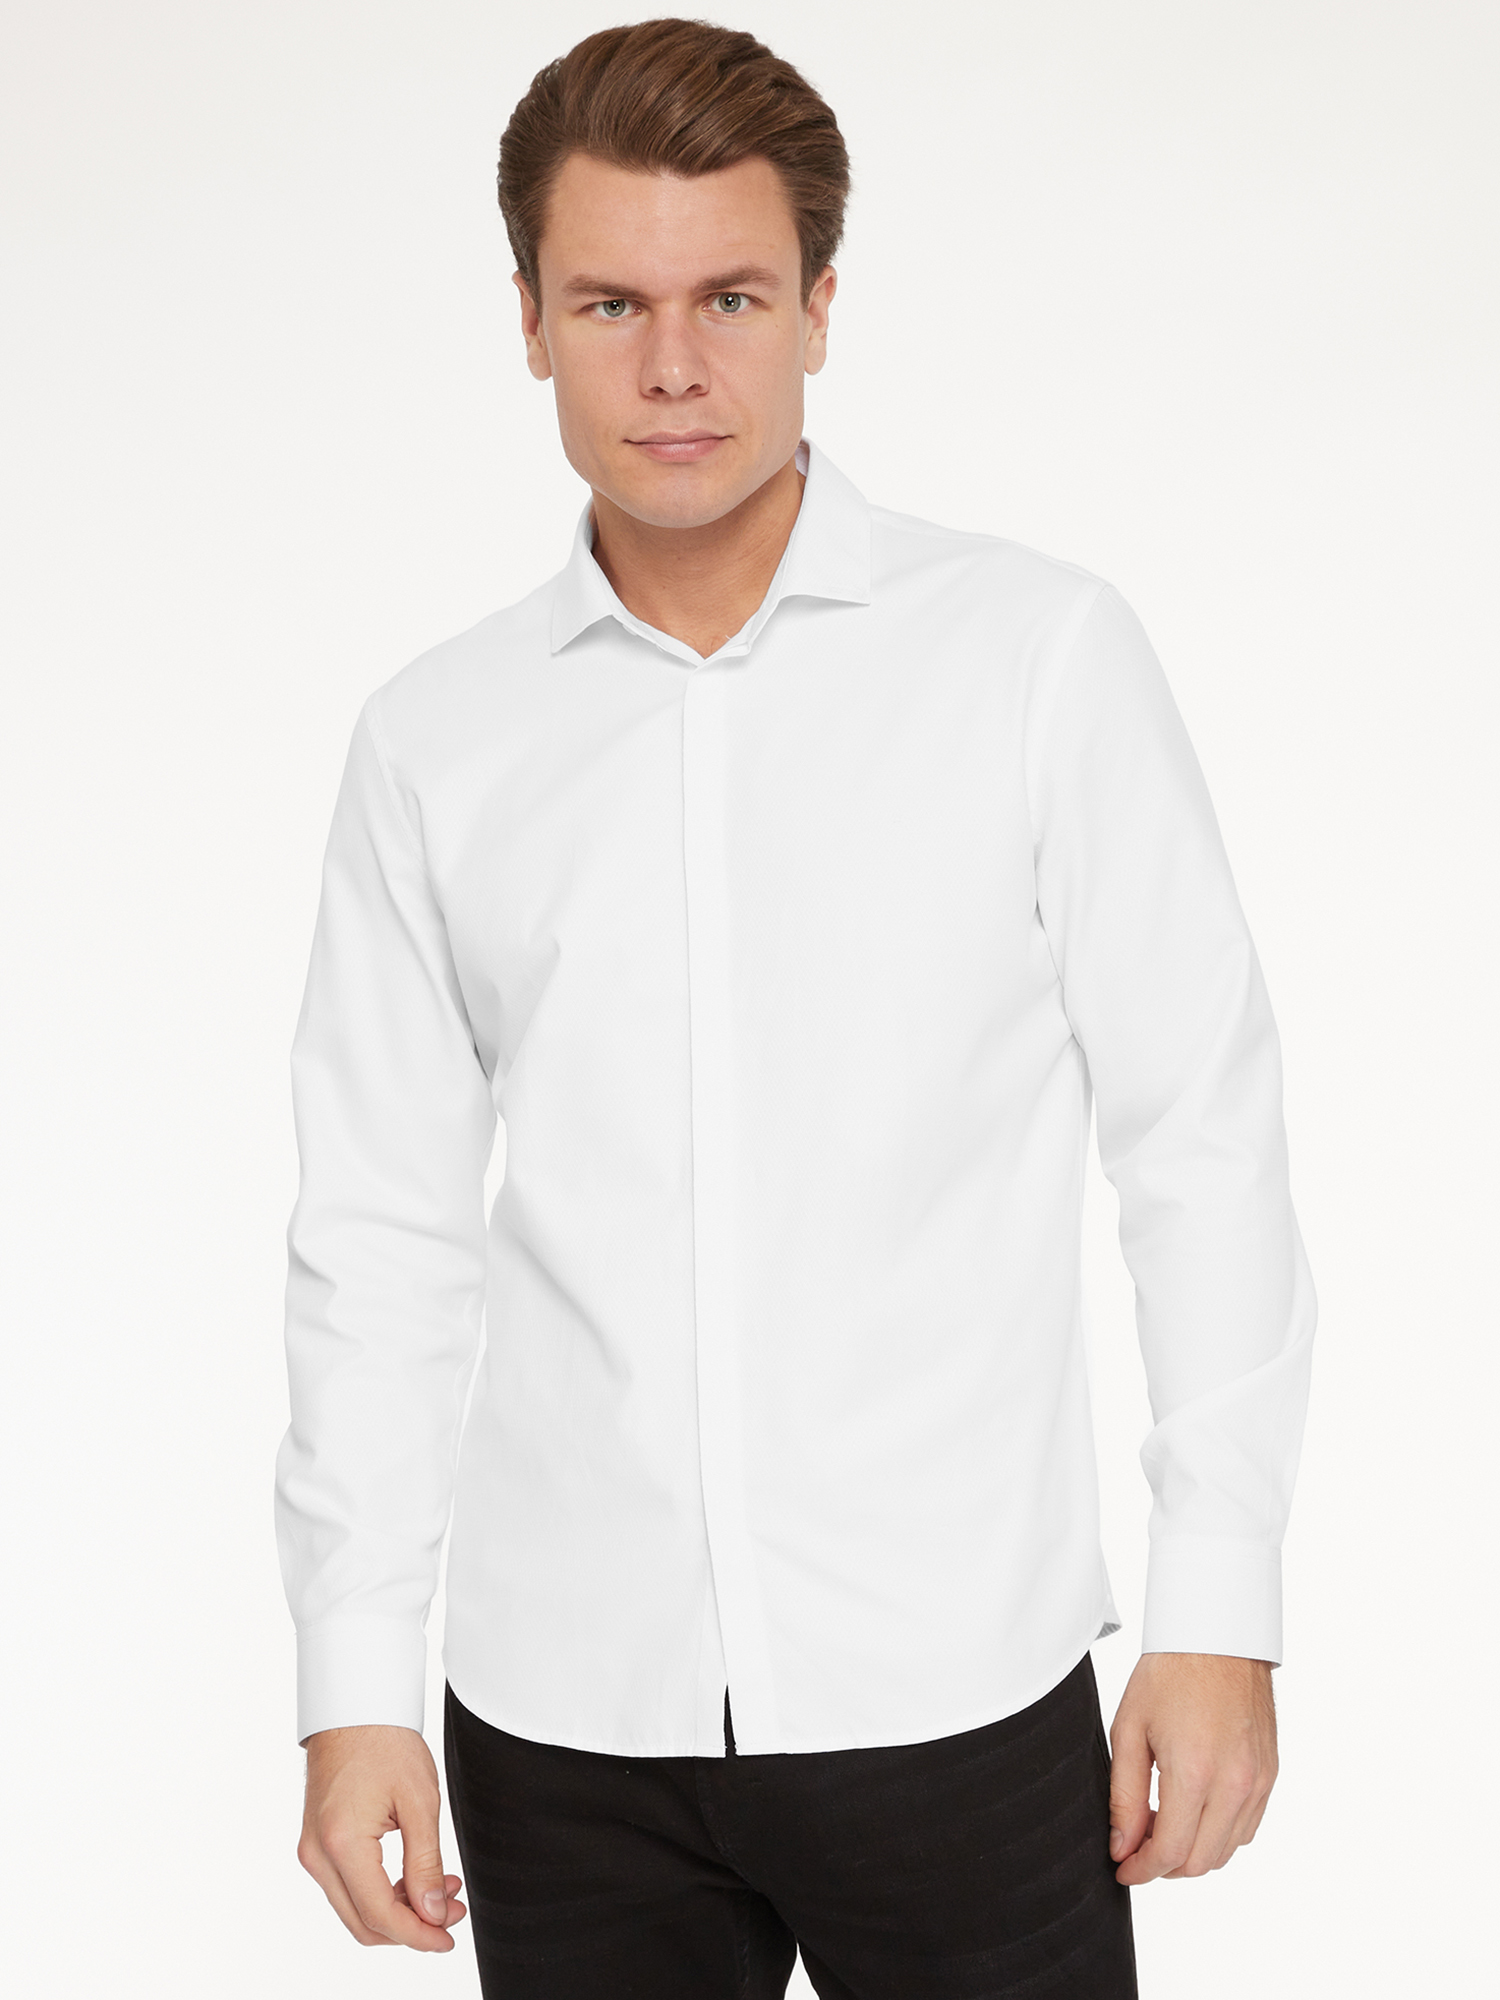 Рубашка мужская oodji 3B110017M-6 белая M